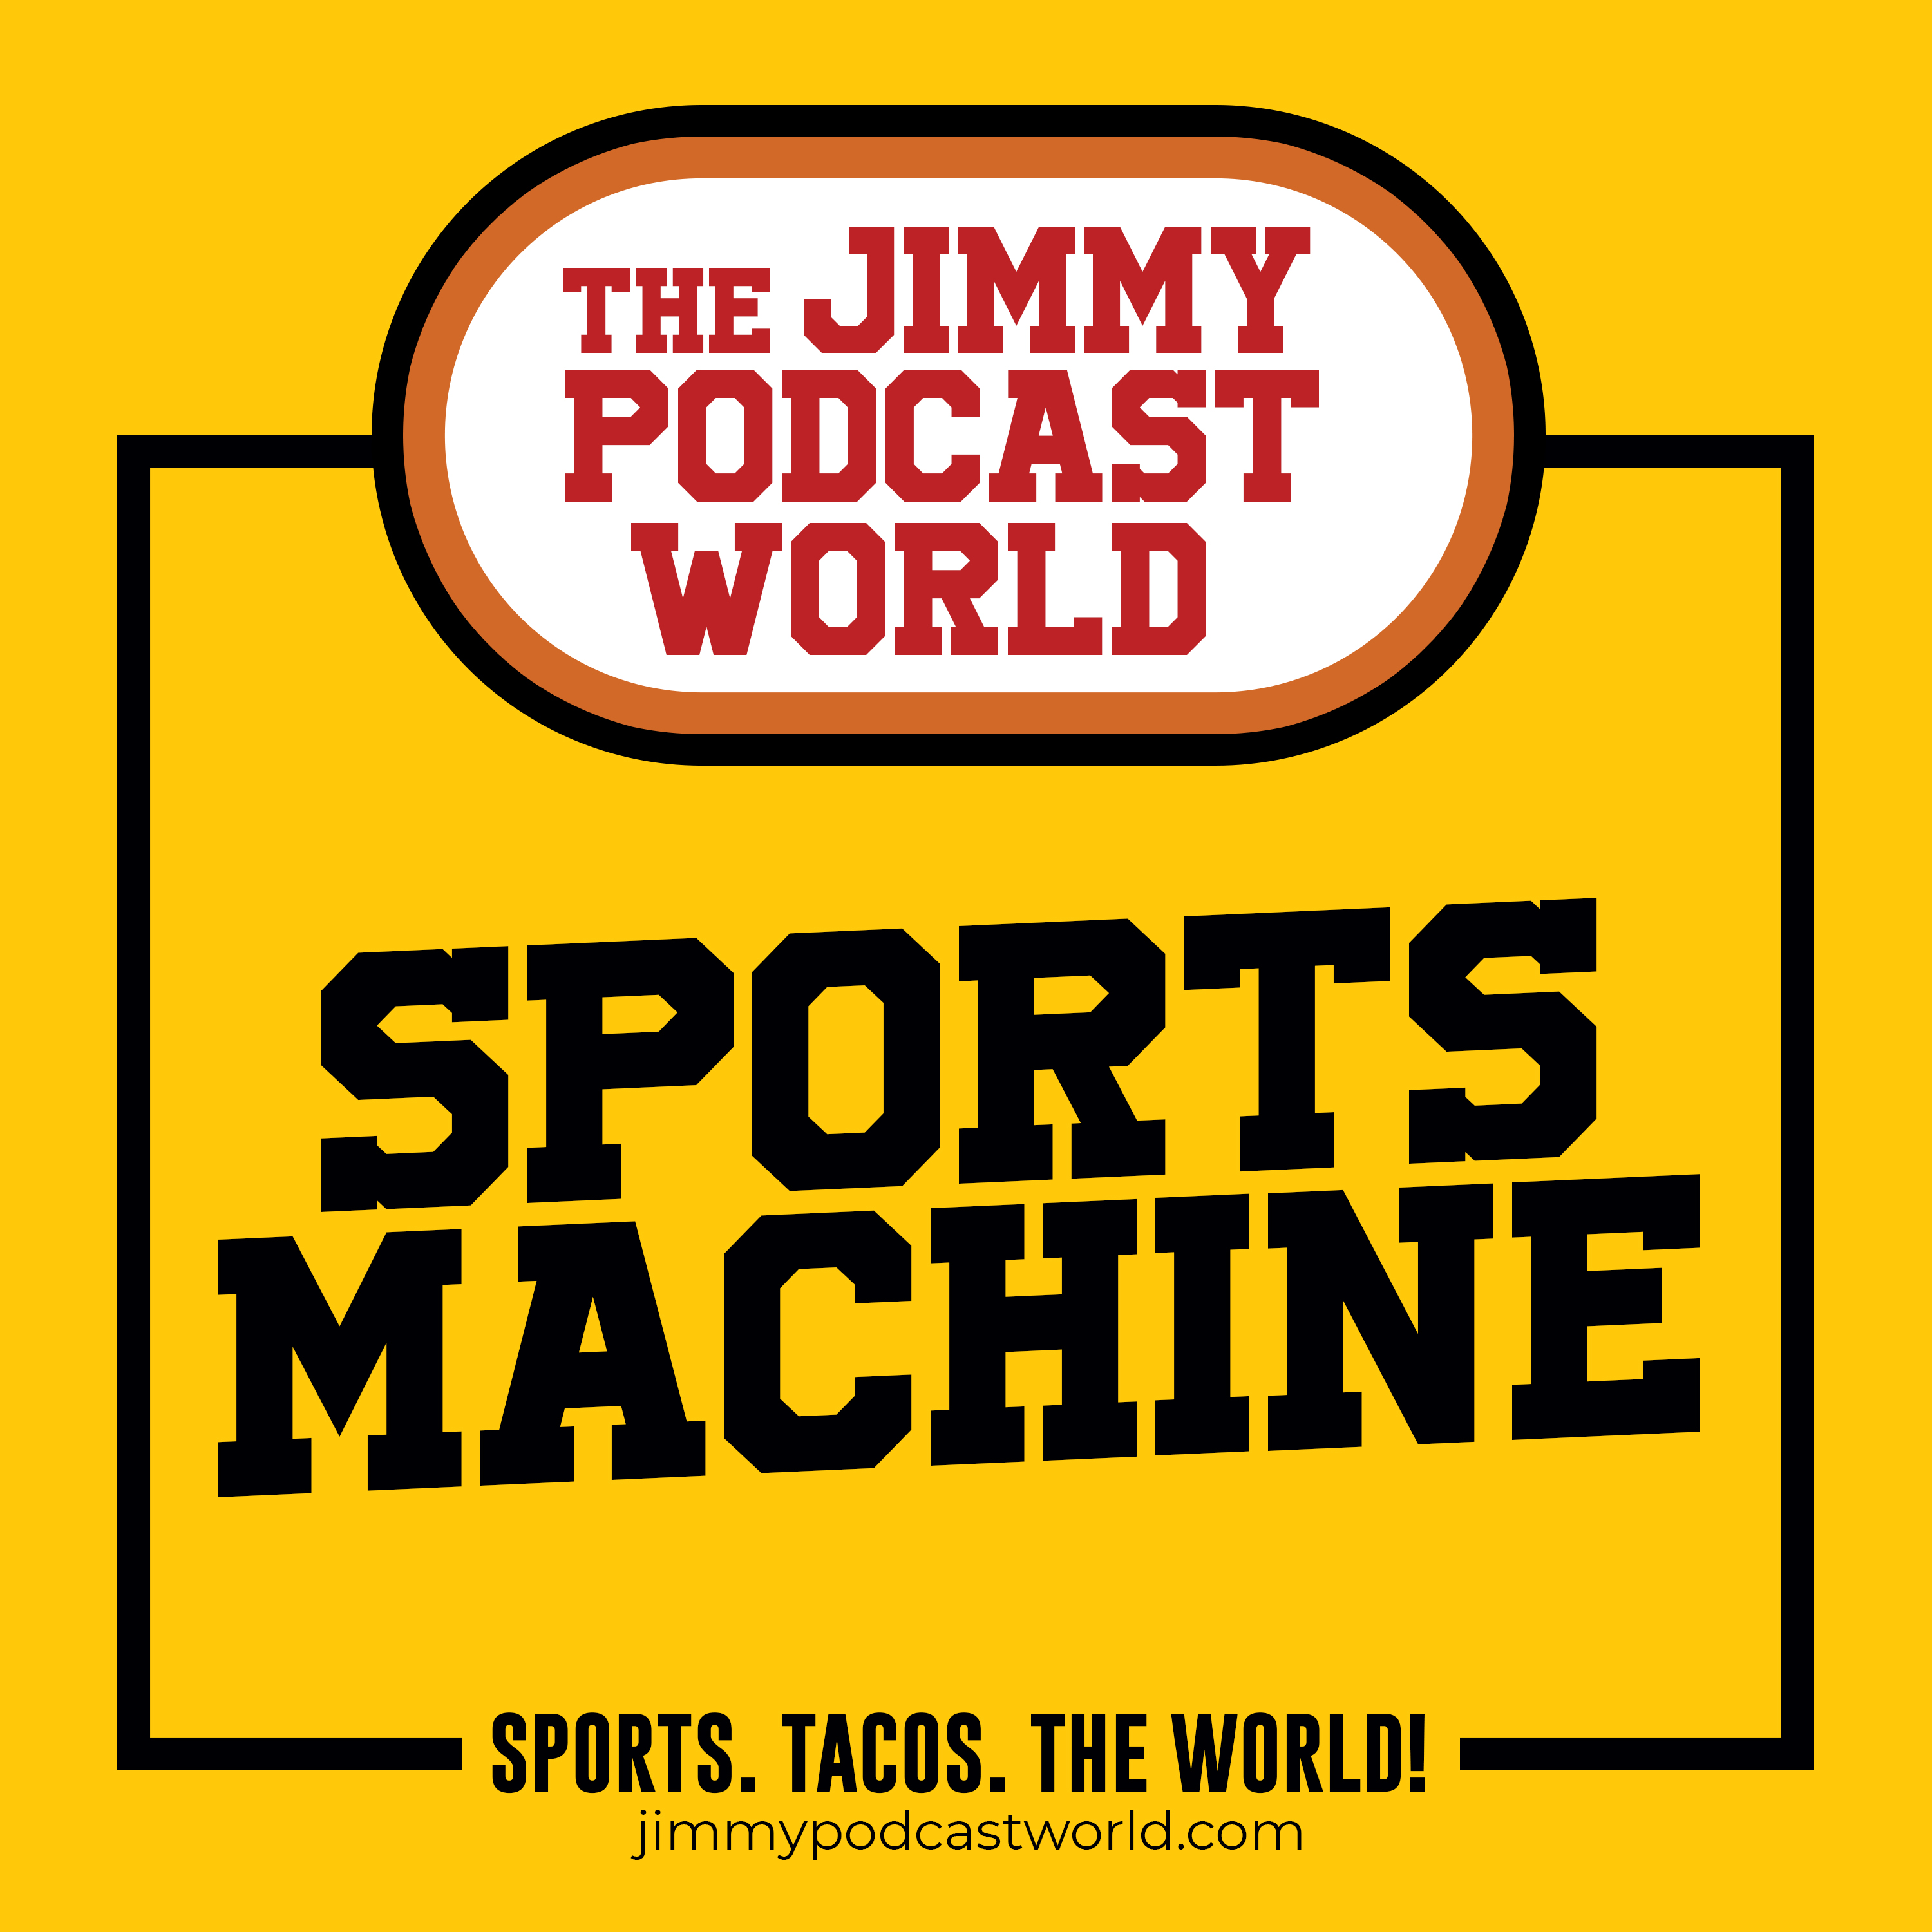 The Jimmy Podcast World Sports Machine